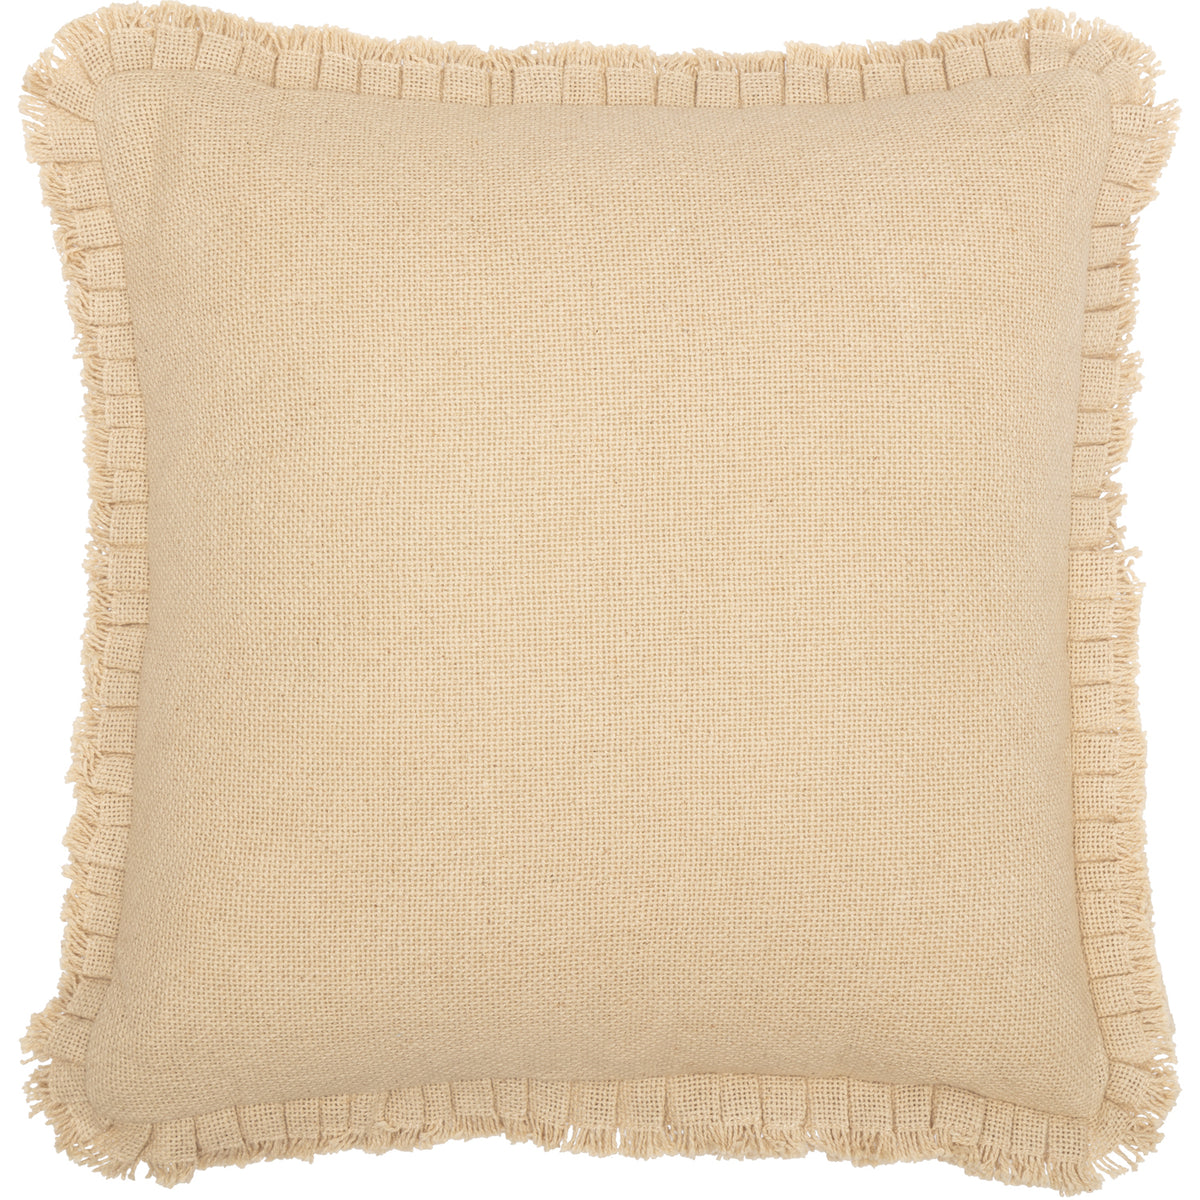 Burlap Vintage Pillow w/ Fringed Ruffle 18x18